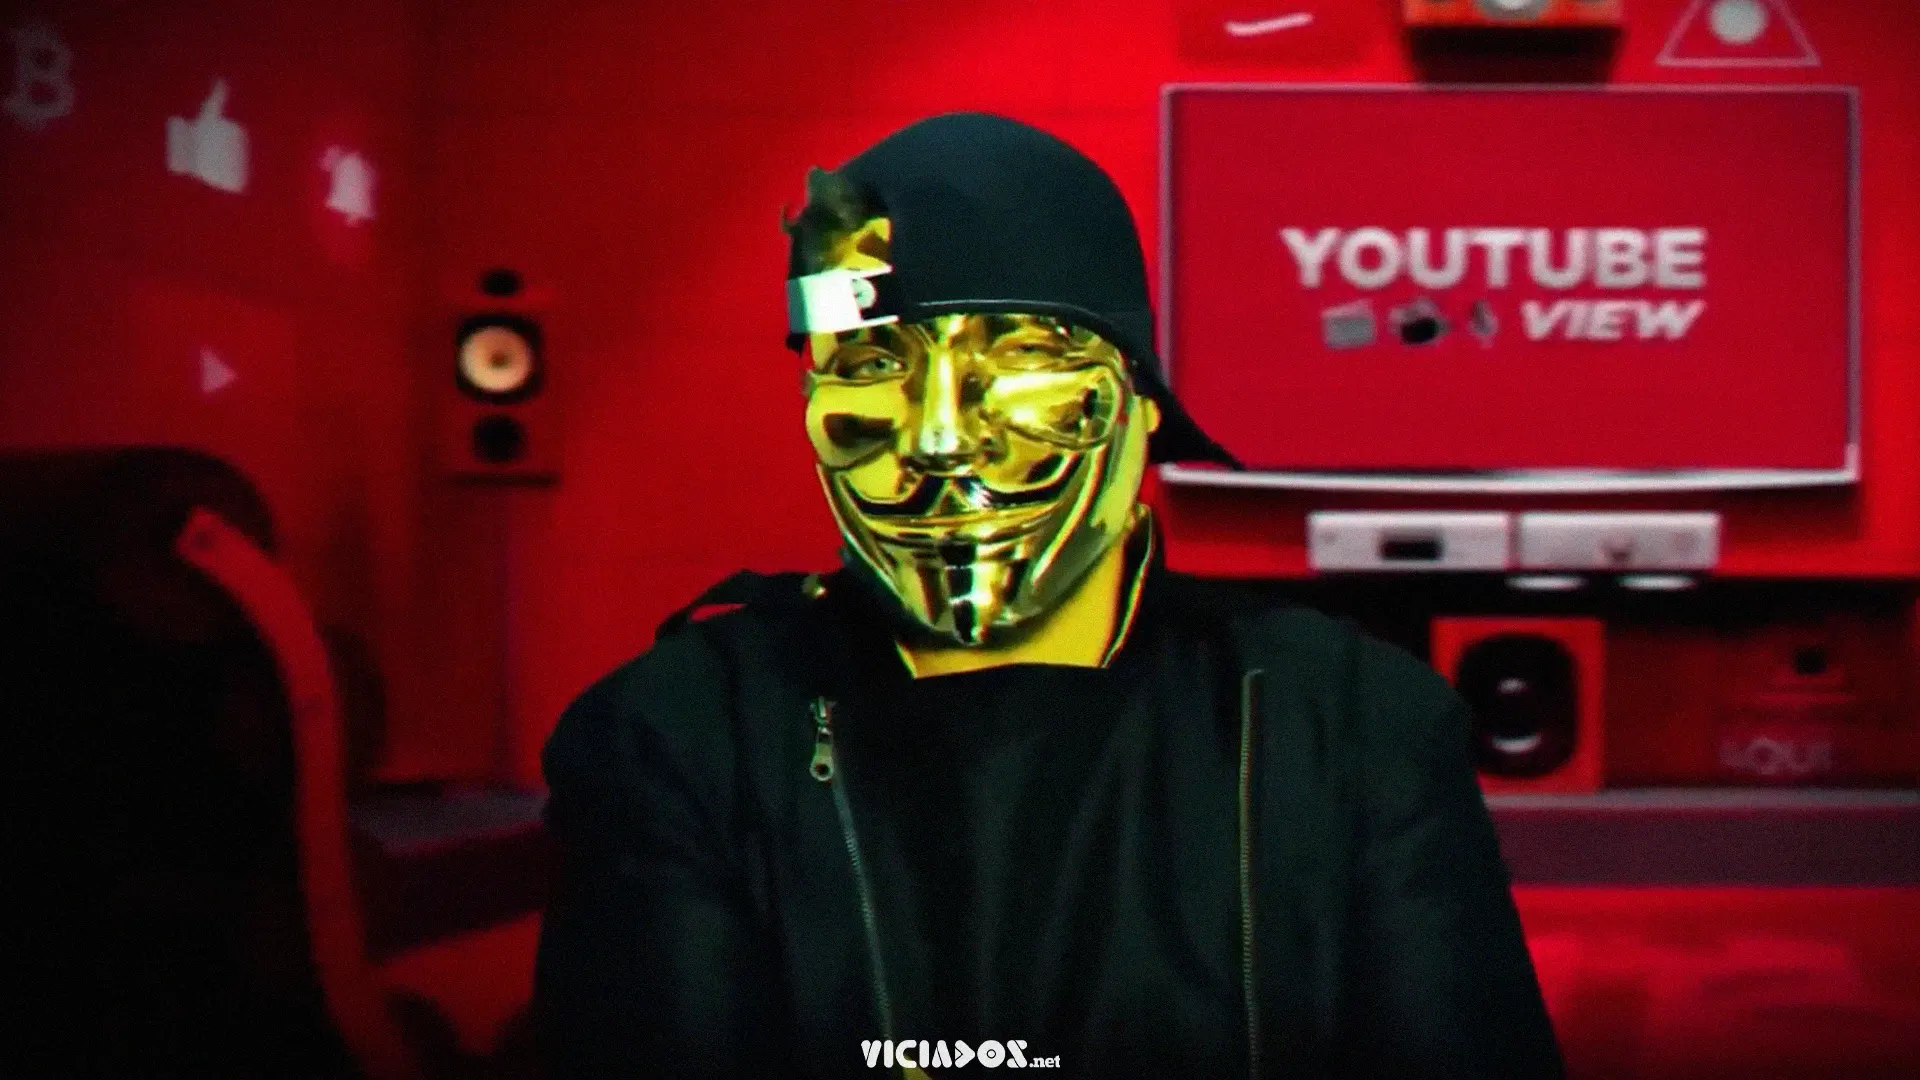 Contente ConTV | Youtuber mascarado finalmente revela o rosto 2022 Viciados